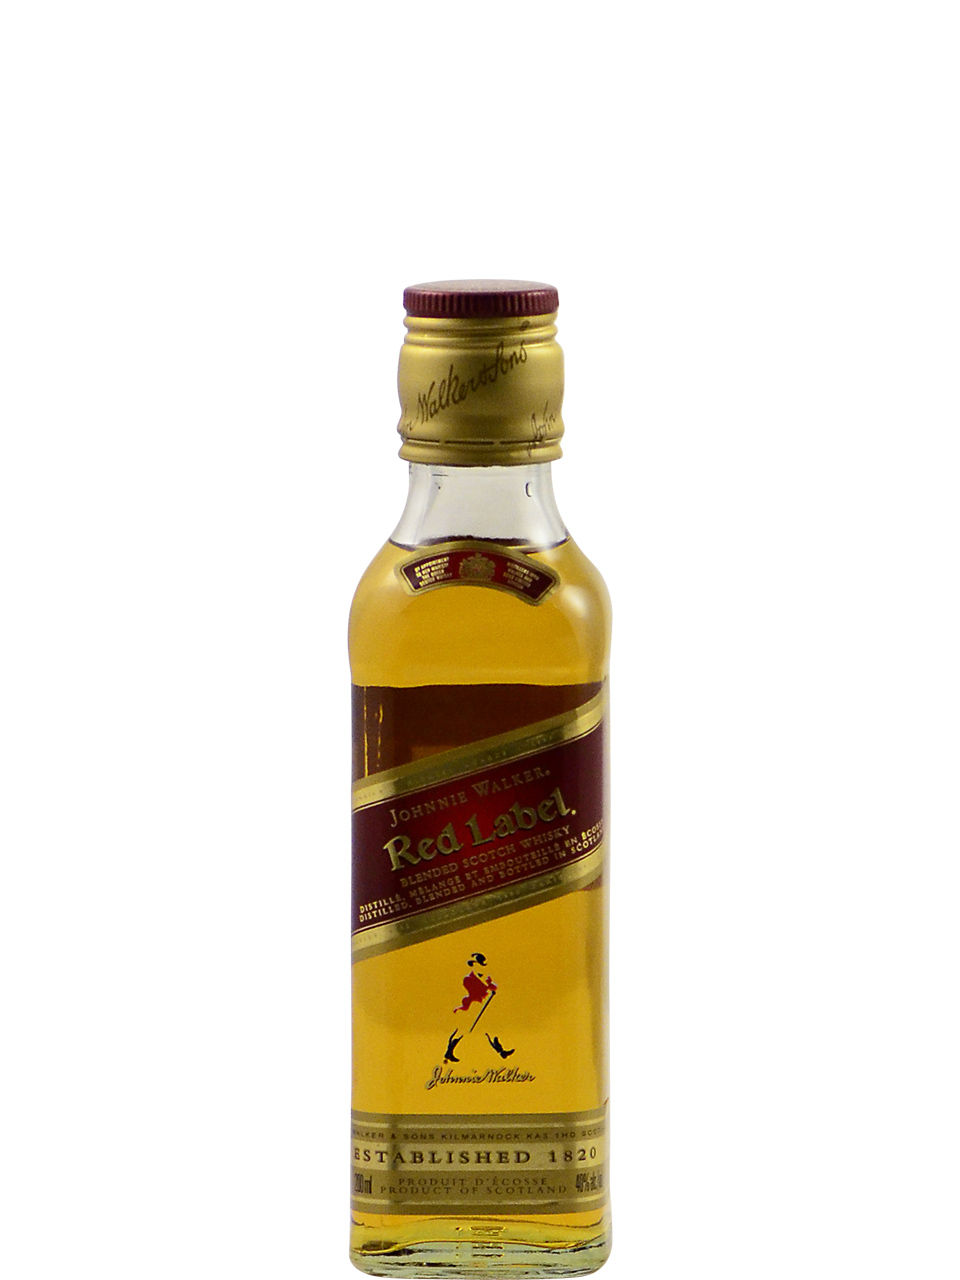 Johnnie Walker Red Label Scotch Whisky